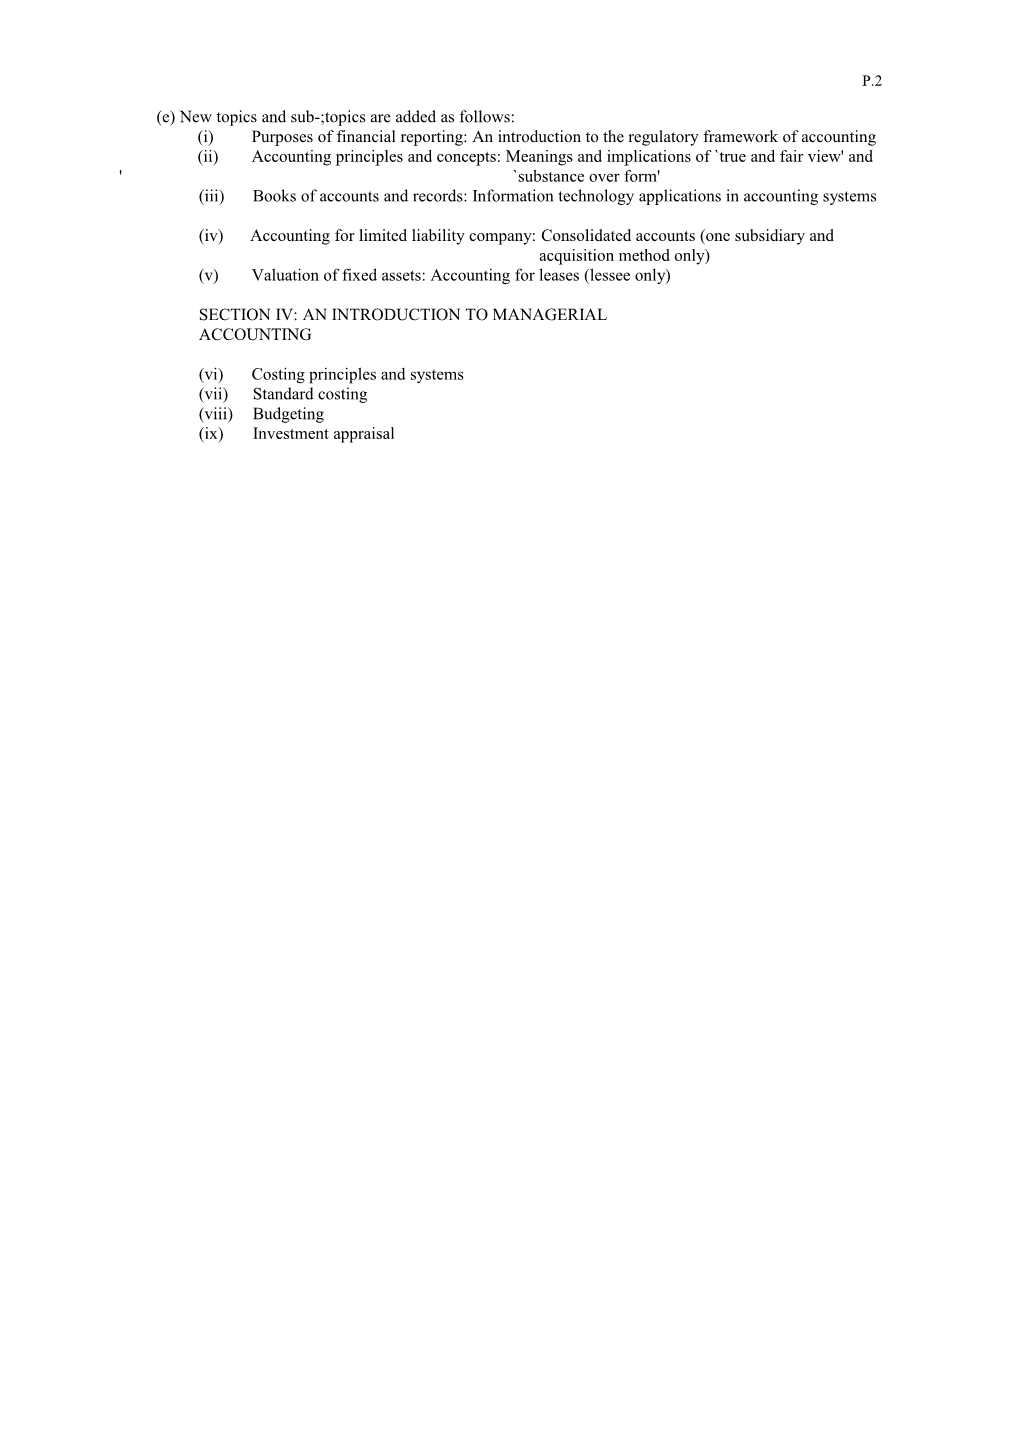 Proposed 2004 HKAL Principles of Accounts Syllabus